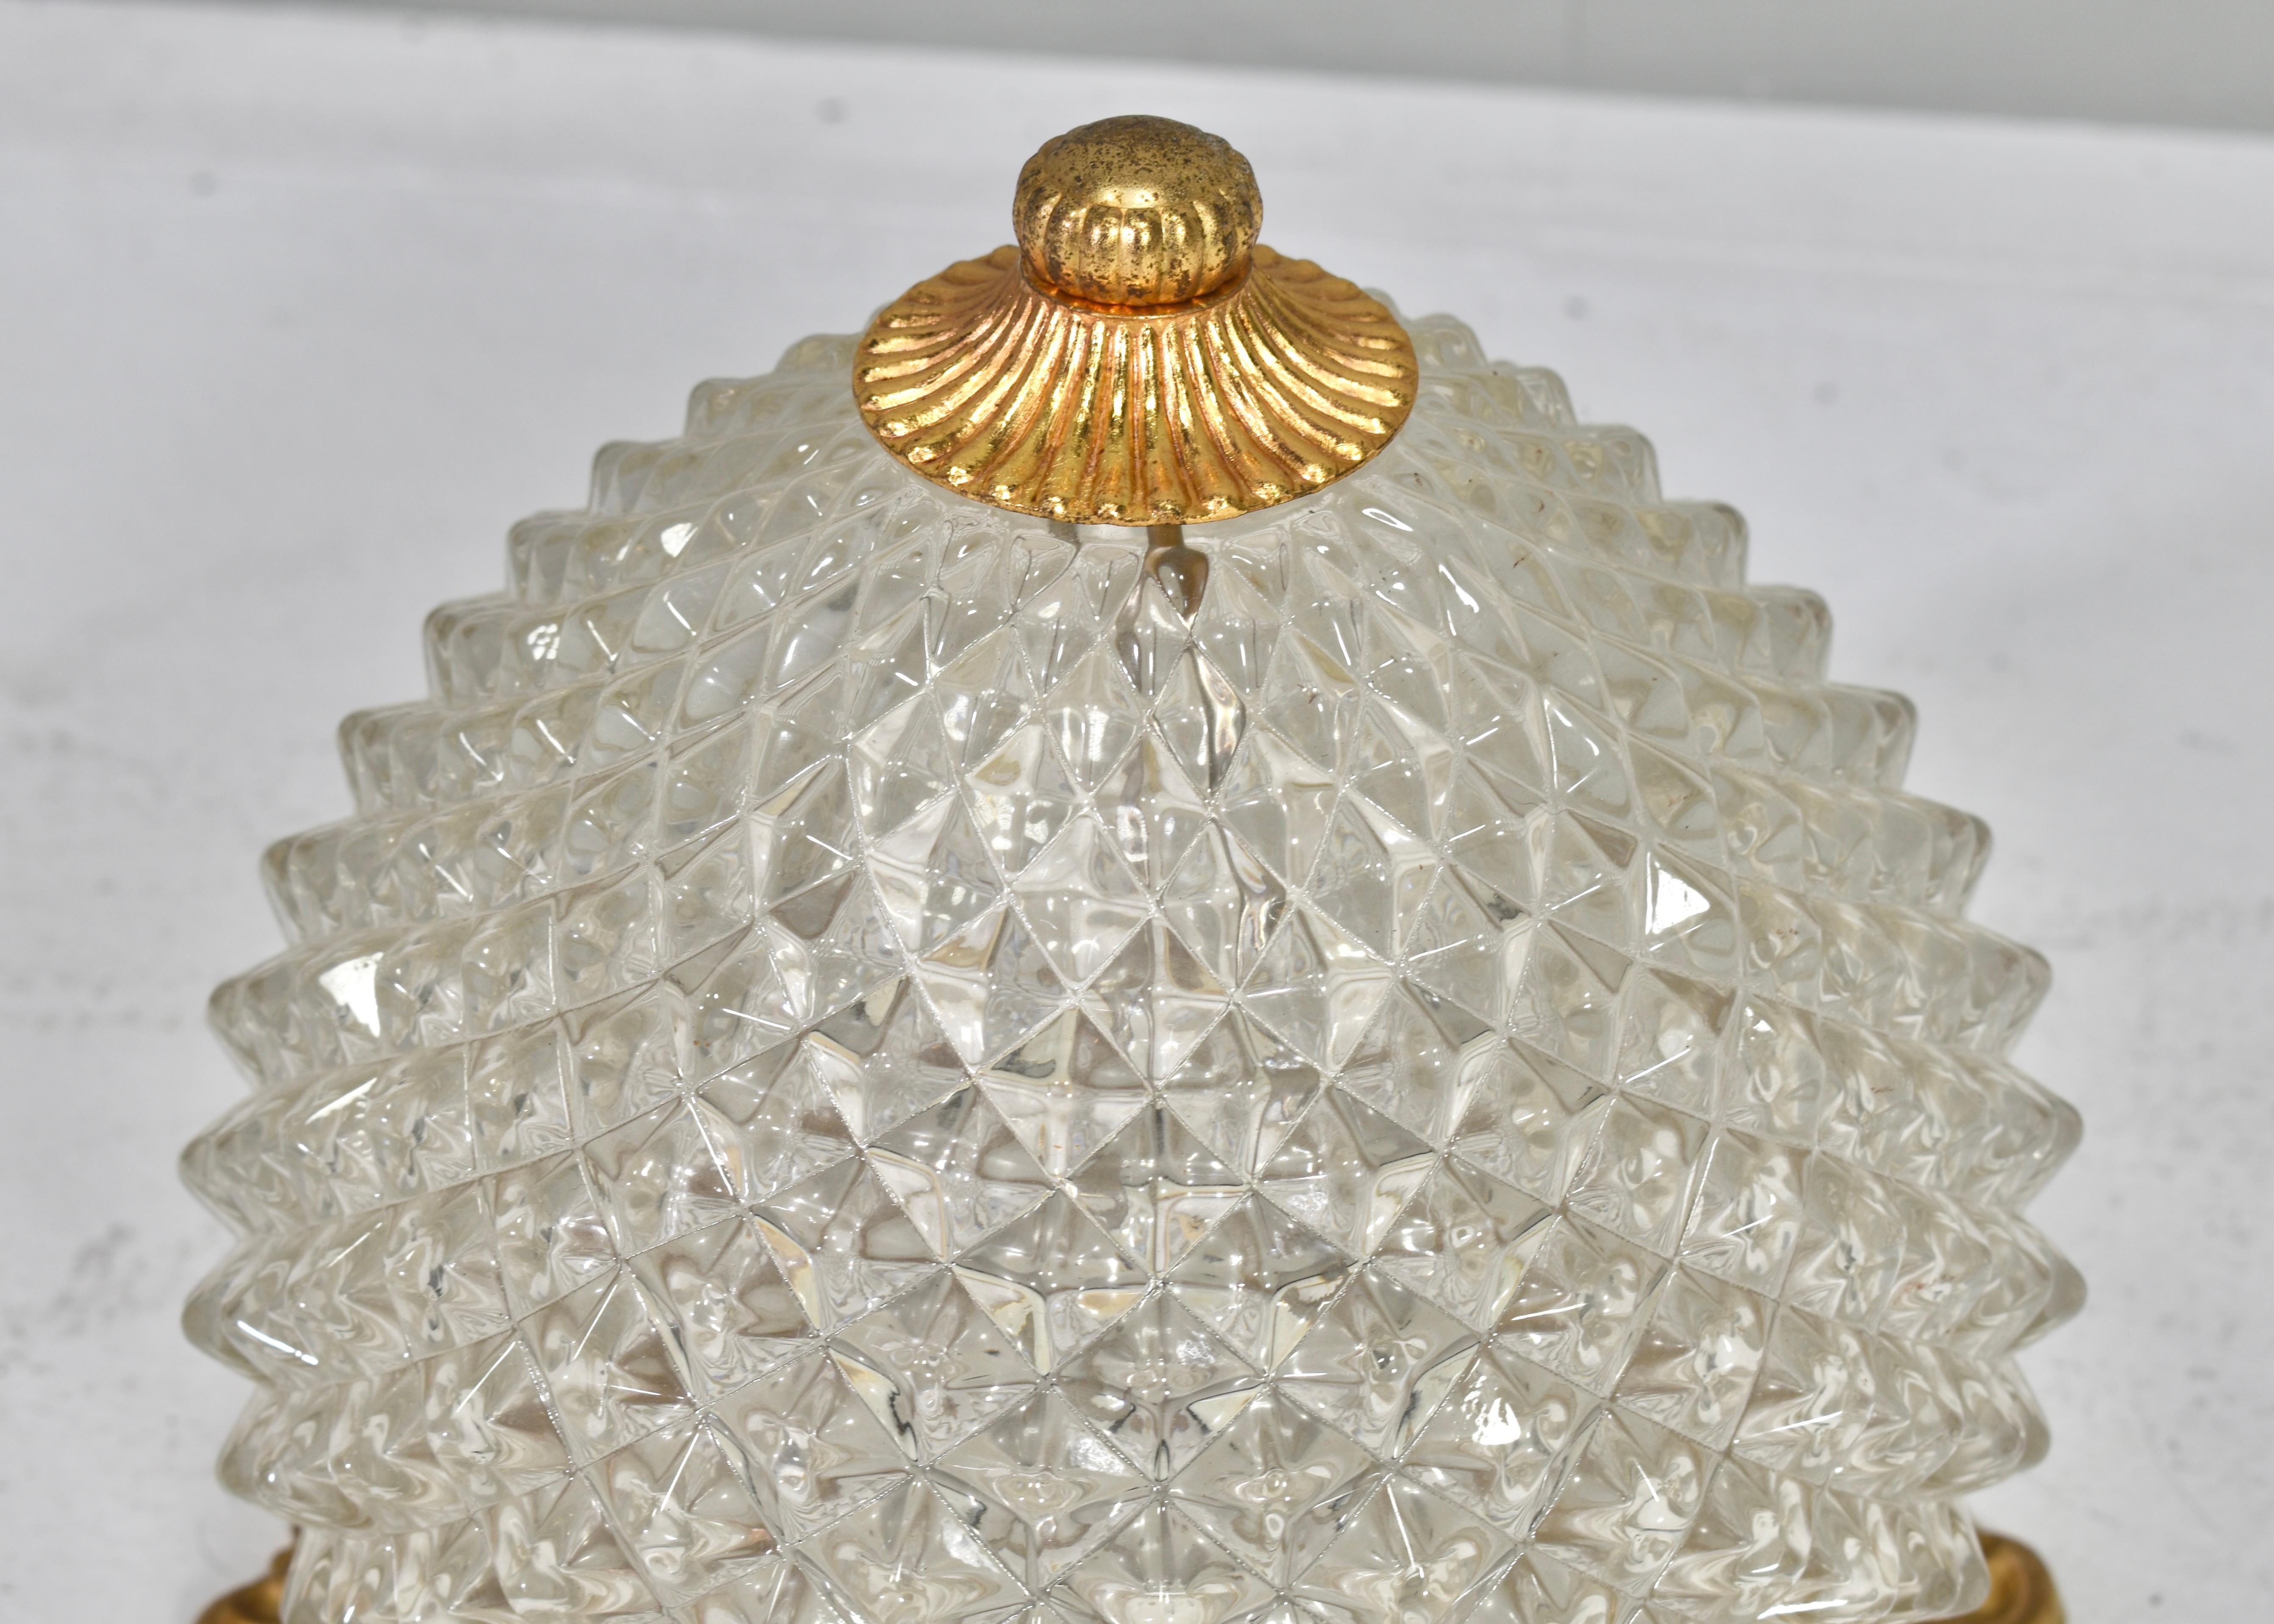 Mid-20th Century SCIOLARI Brass Pineapple Ceiling lamp / Wall Scone, Italy - circa 1960 - 1970 For Sale